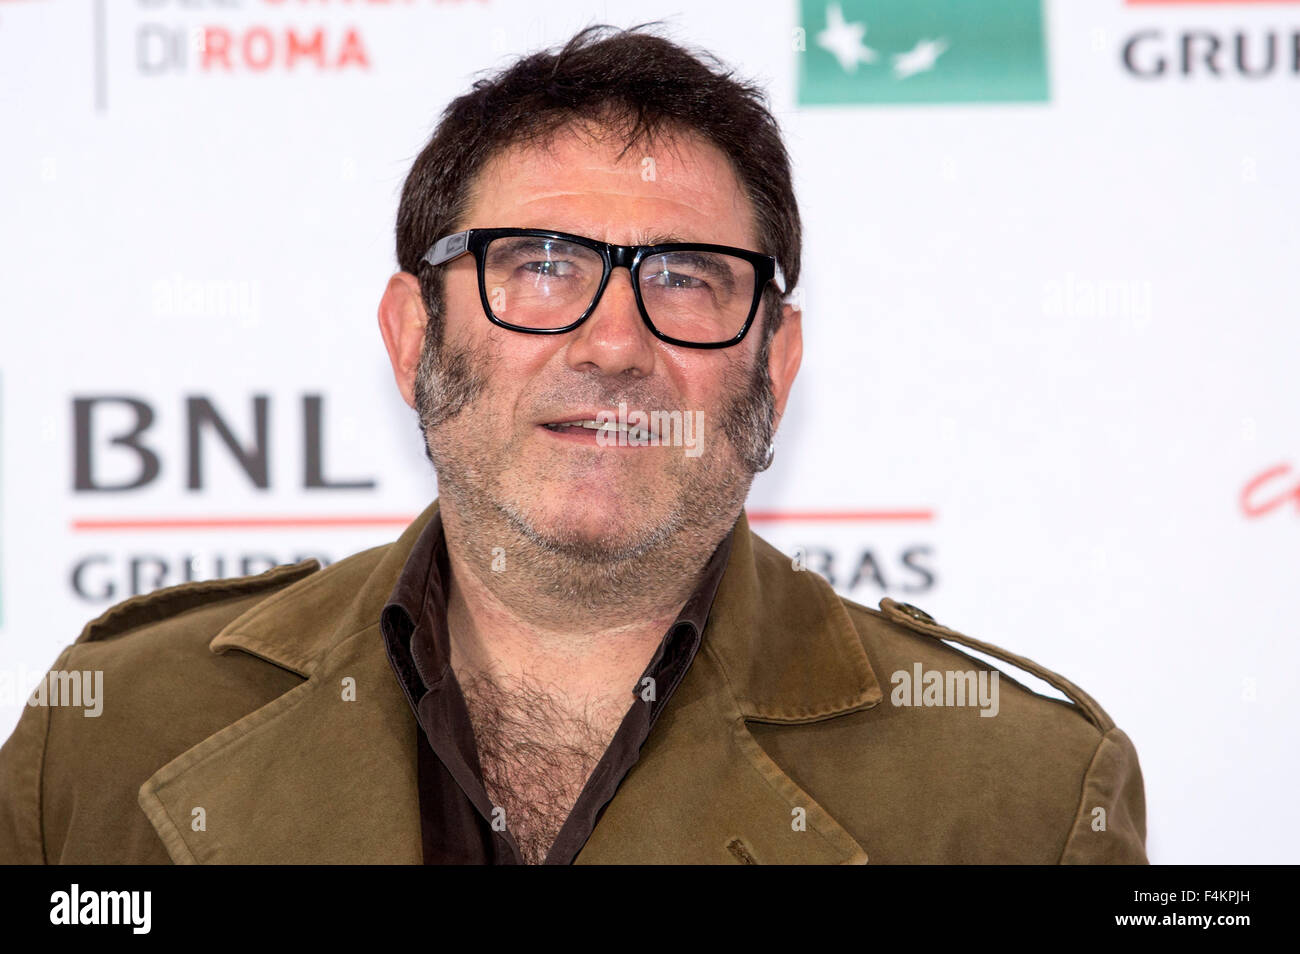 Rome, Italy. 19th Oct, 2015. Sergi Lopez attends the 'Le Roi du Monde' photocall at 10th Rome Film Fest 2015/Festa del Cinema di Roma 2015 on October 19, 2015 in Rome, Italy. Credit:  dpa/Alamy Live News Stock Photo